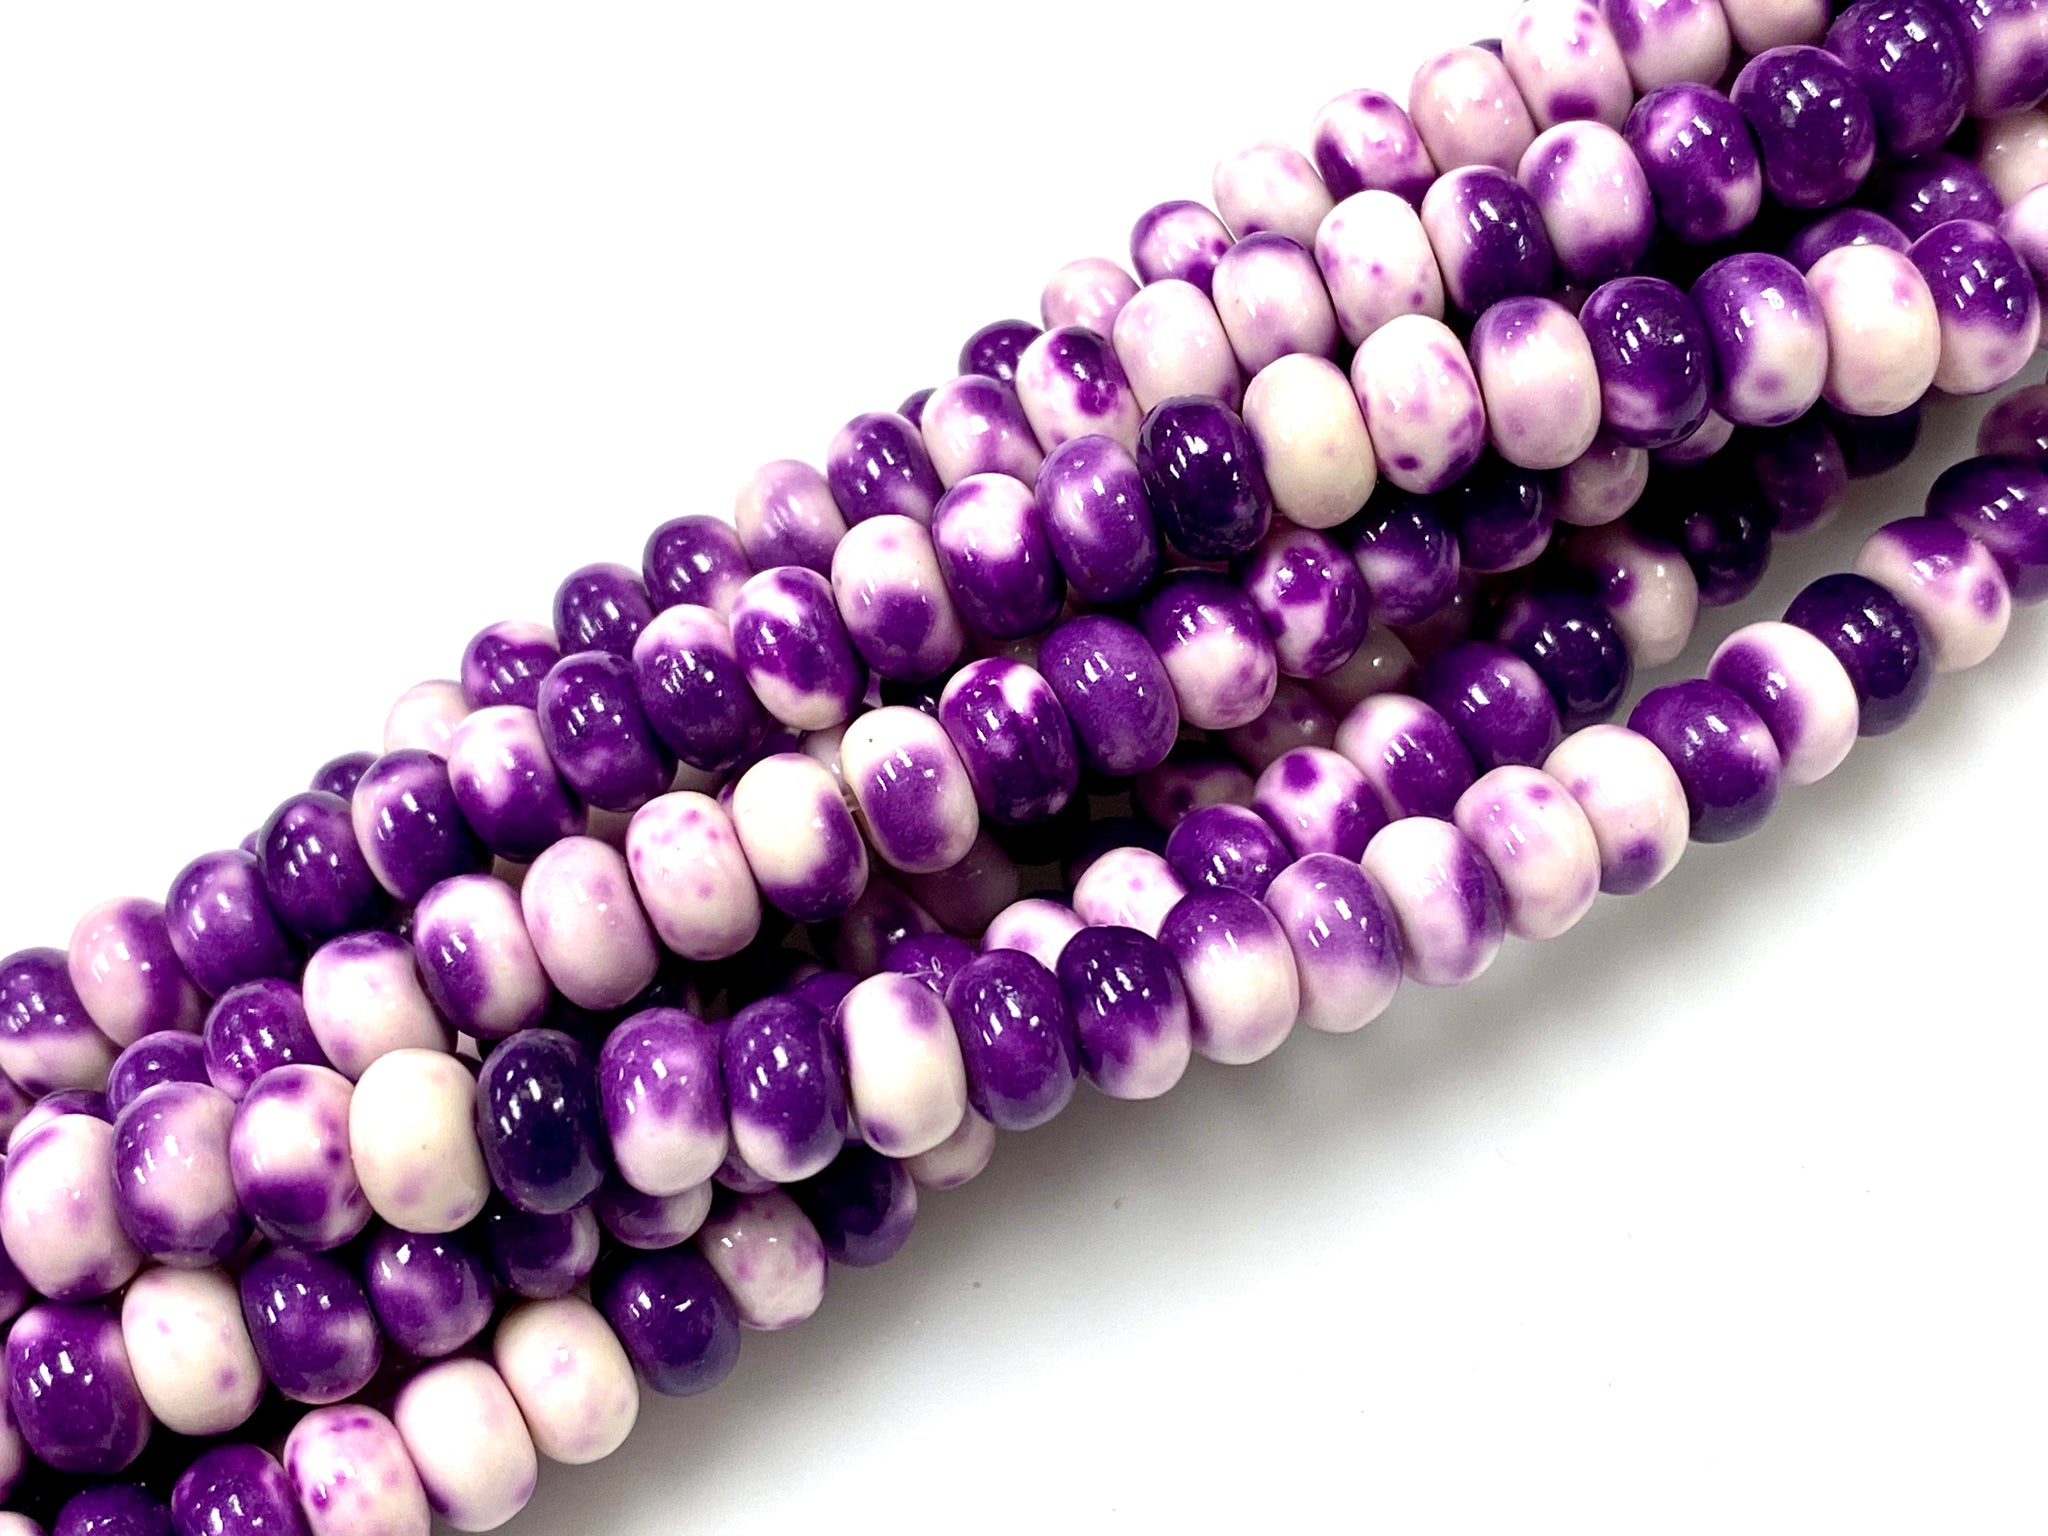 Natural Purple Rain Jasper Beads / Faceted Rondelle Shape Beads / Healing Energy Stone Beads / 6mm 2 Strand Gemstone Beads